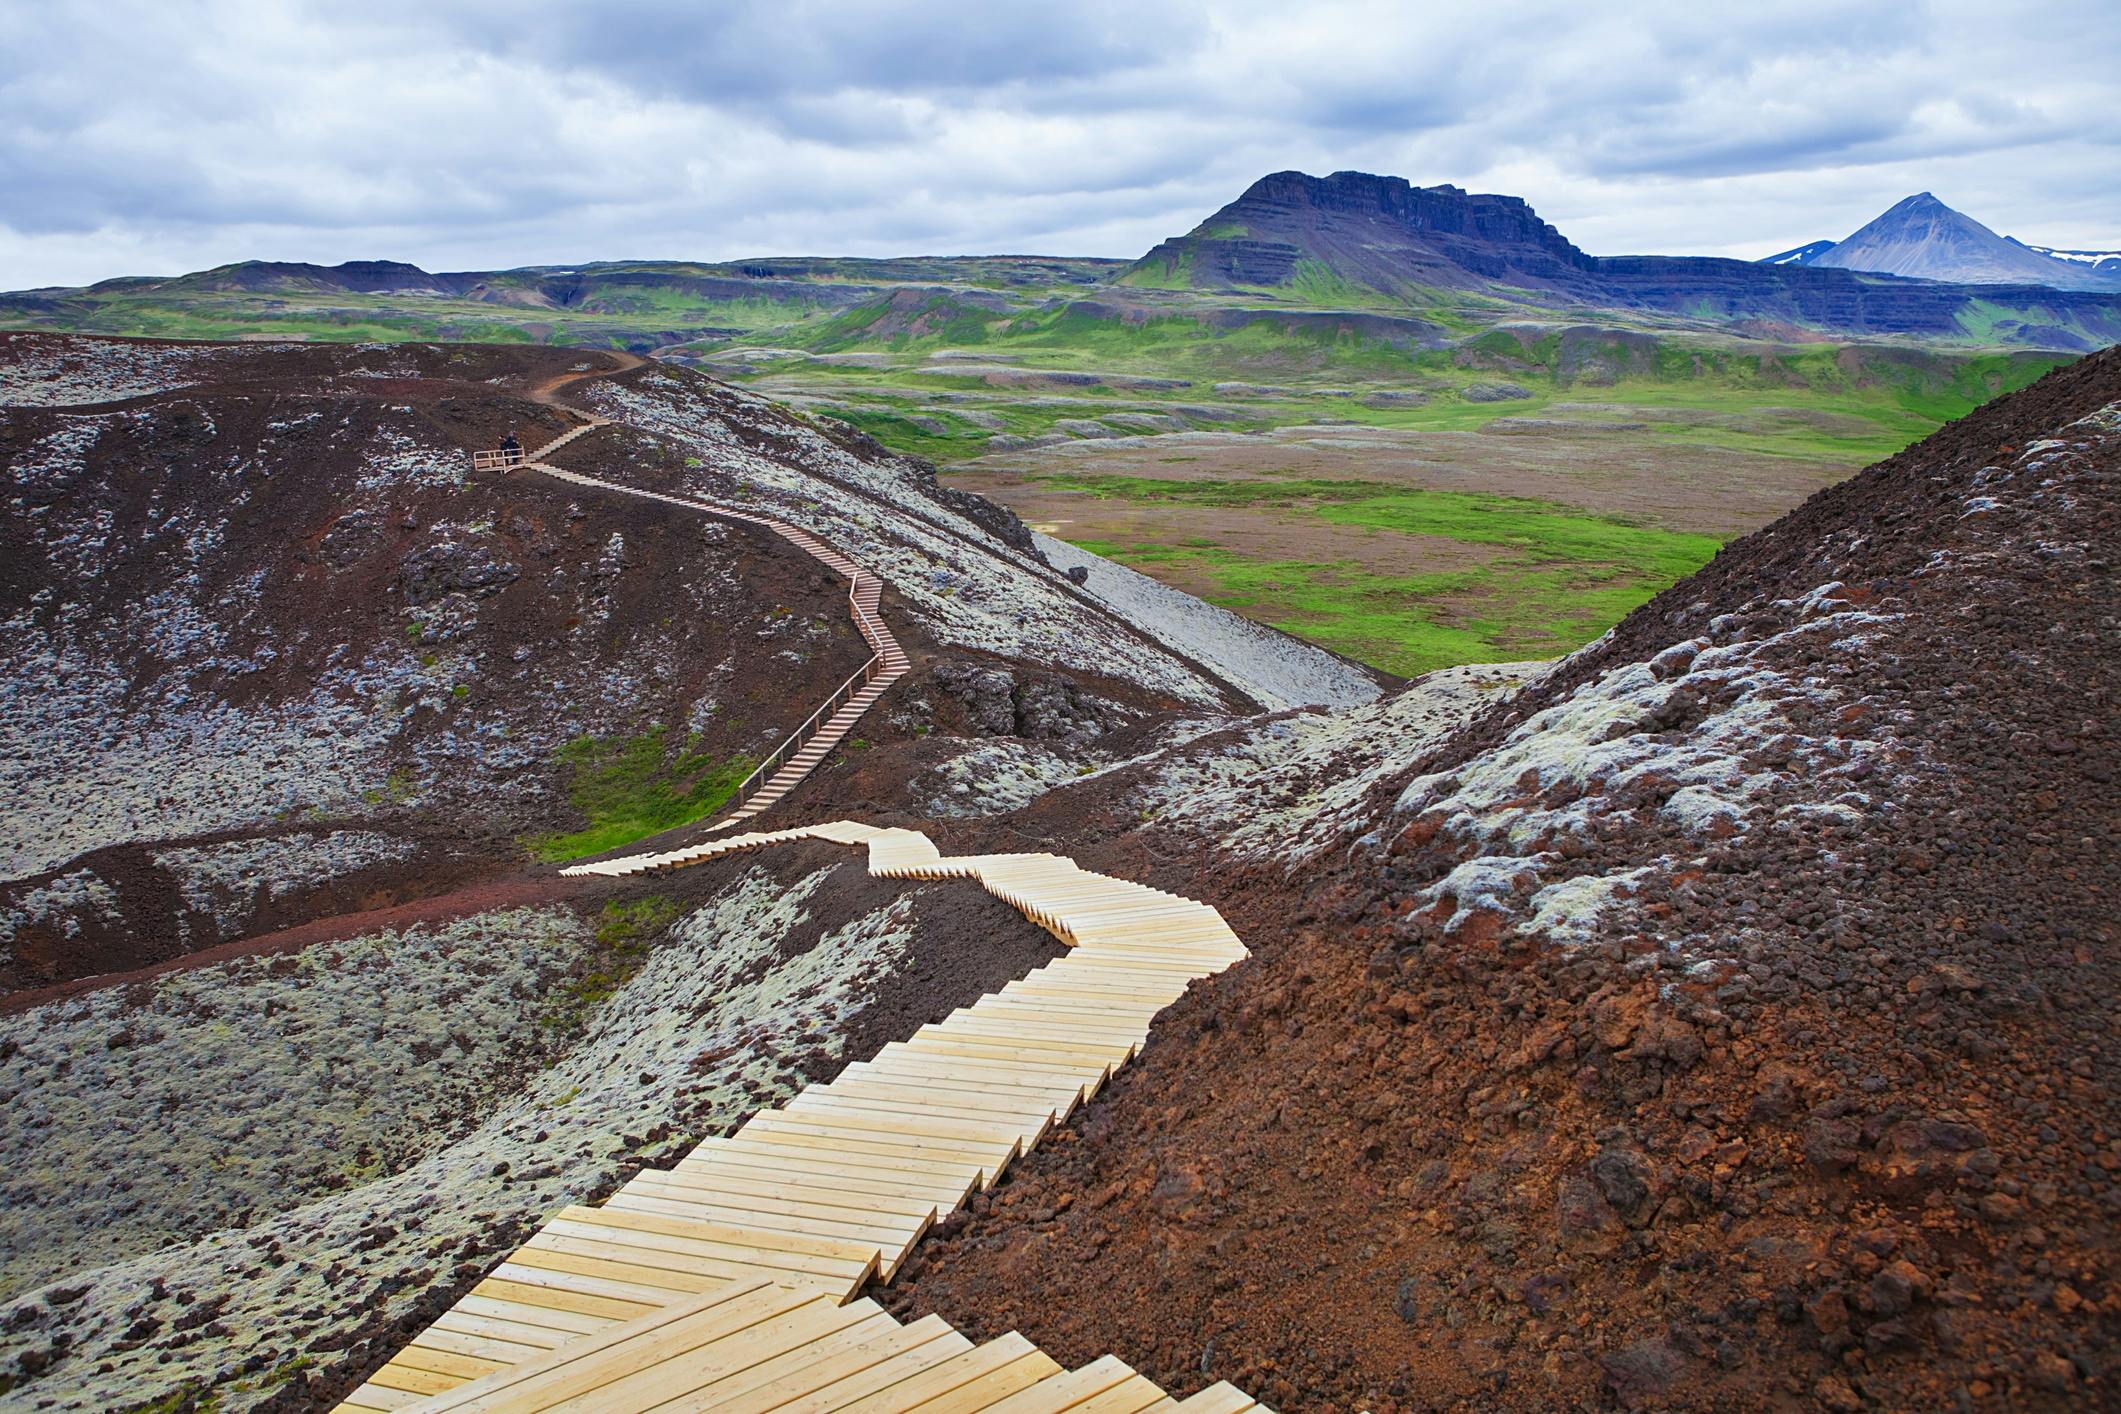 Grabrok crater in West Iceland